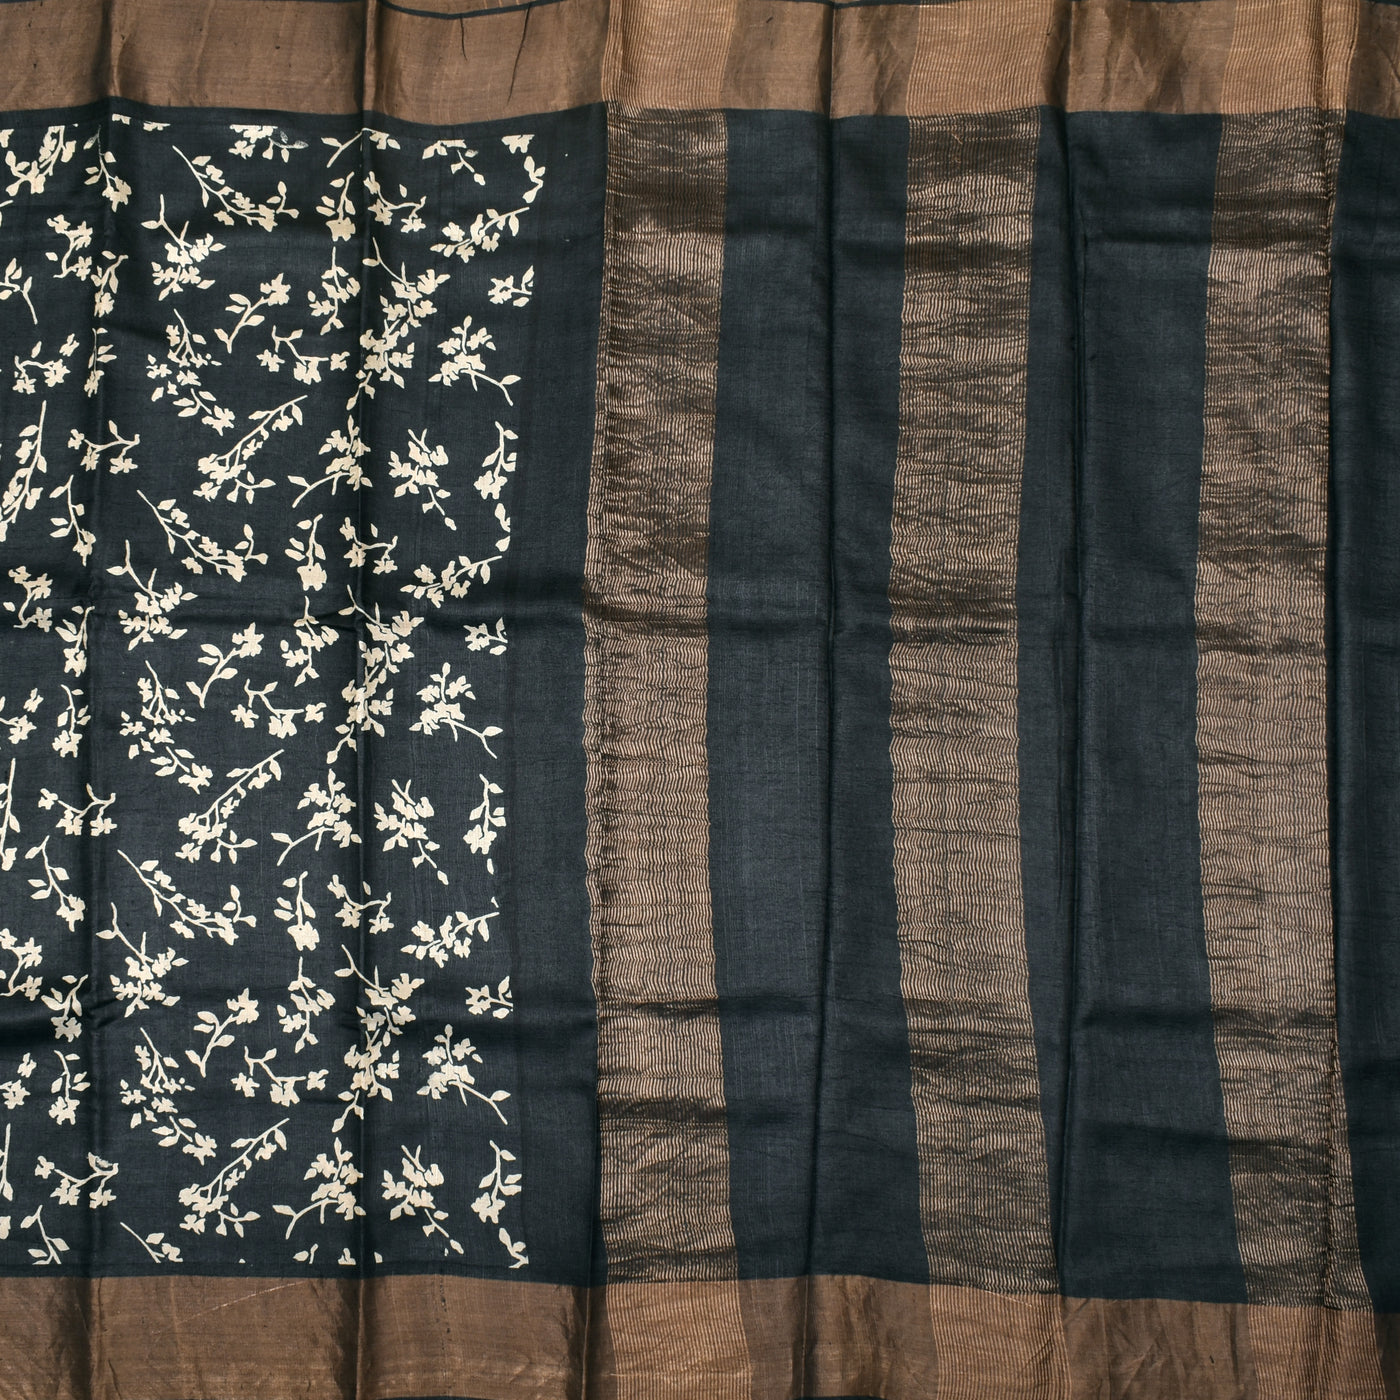 Black Tussar Silk Saree with Flower Printed Design